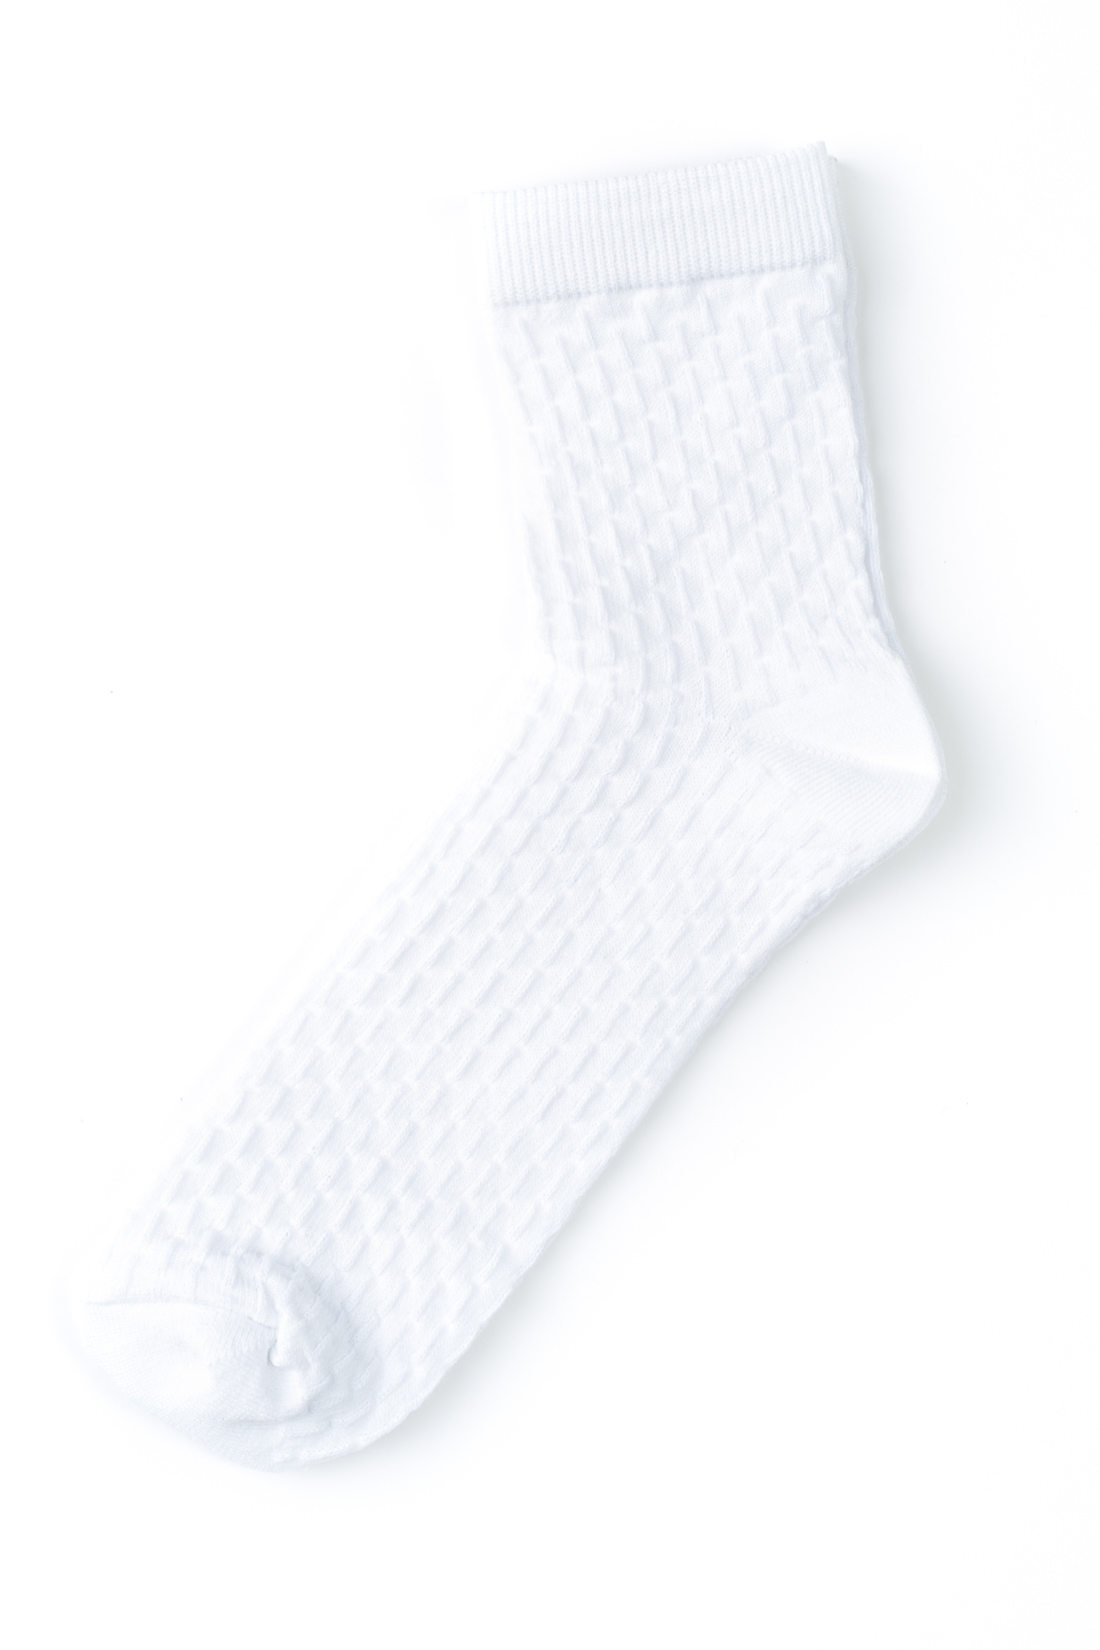 Белые носки с узором (арт. baon B397017), размер 35/37, цвет белый